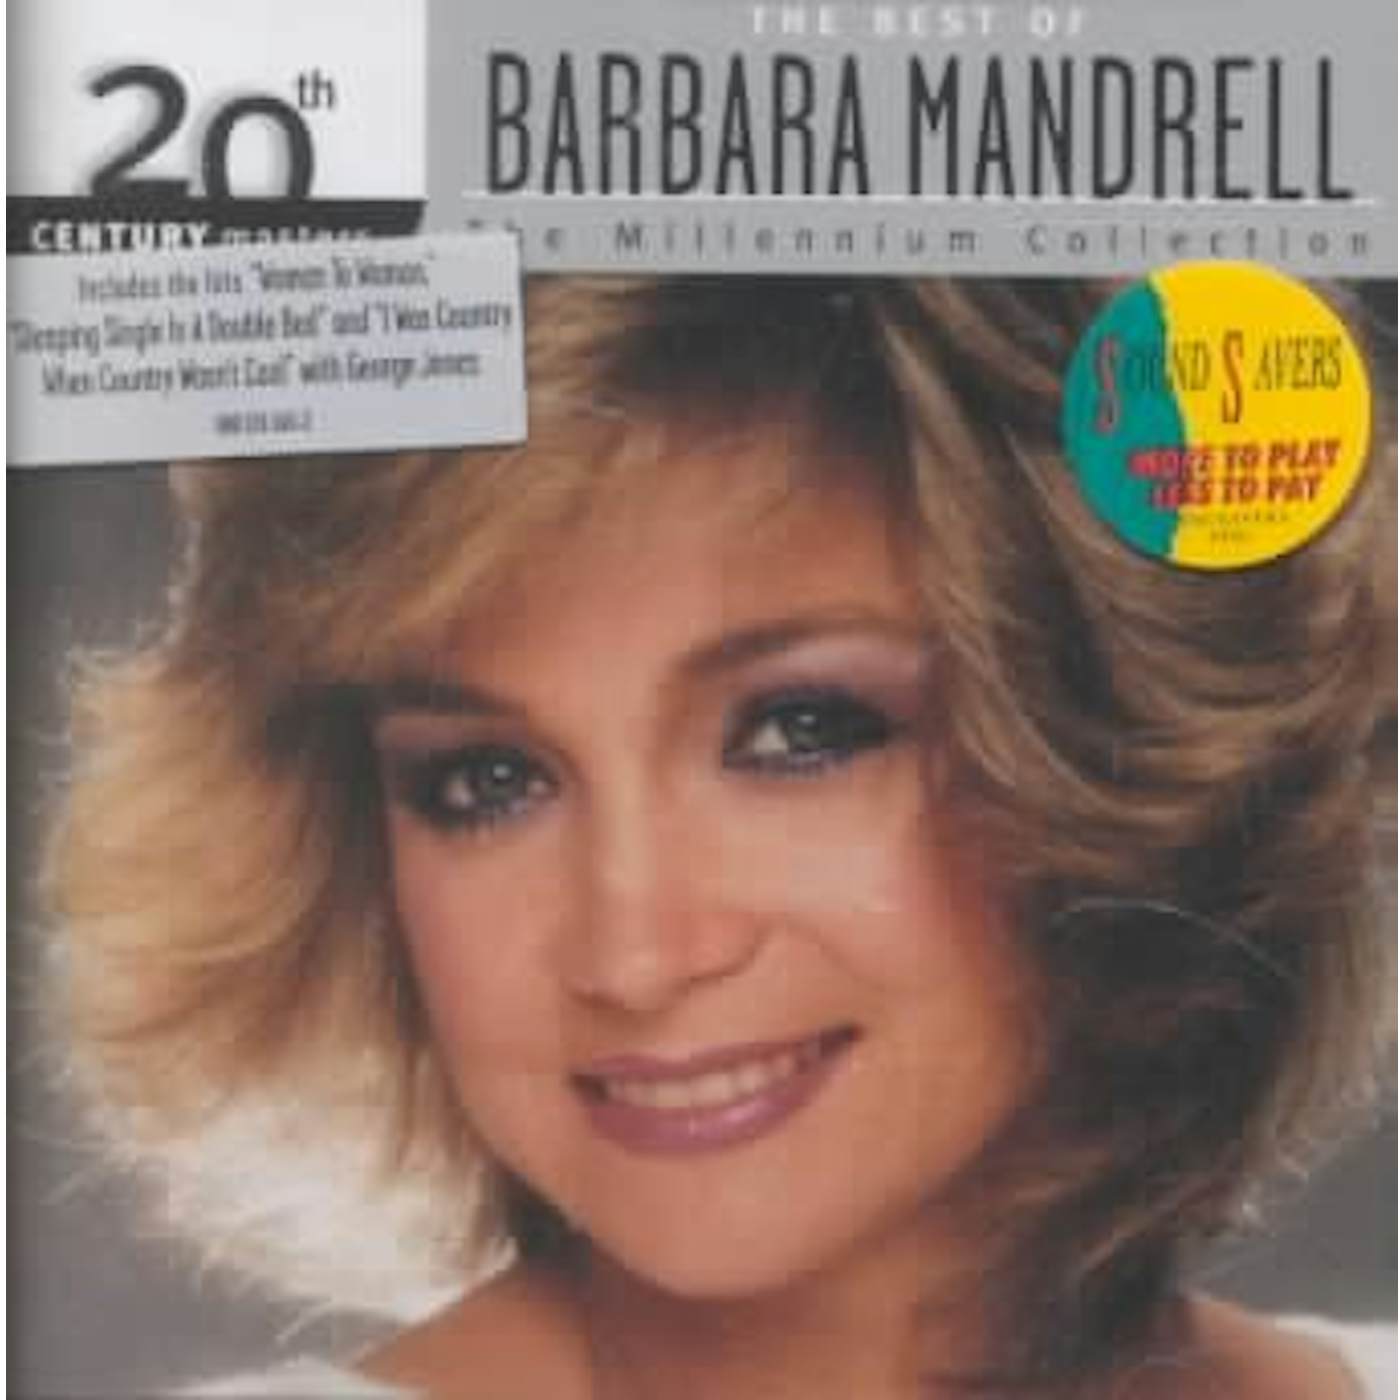 Barbara Mandrell Millennium Collection - 20th Century Masters CD